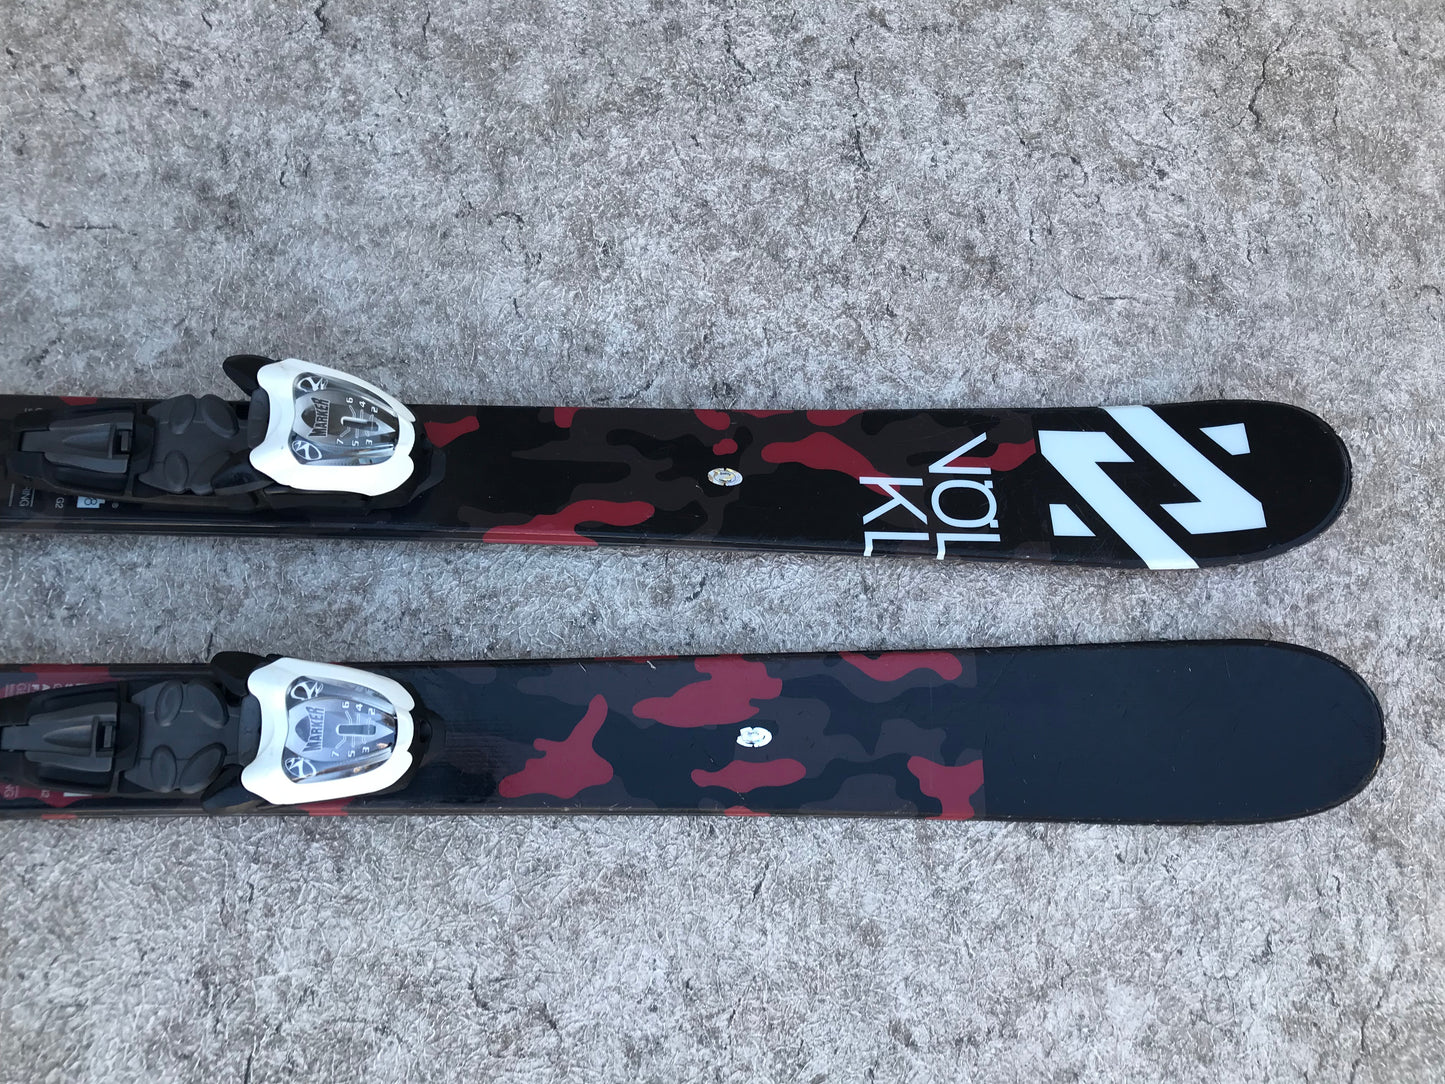 Ski 138 Volki Twin Tip Free Ride Parabolic Black White Red With Bindings